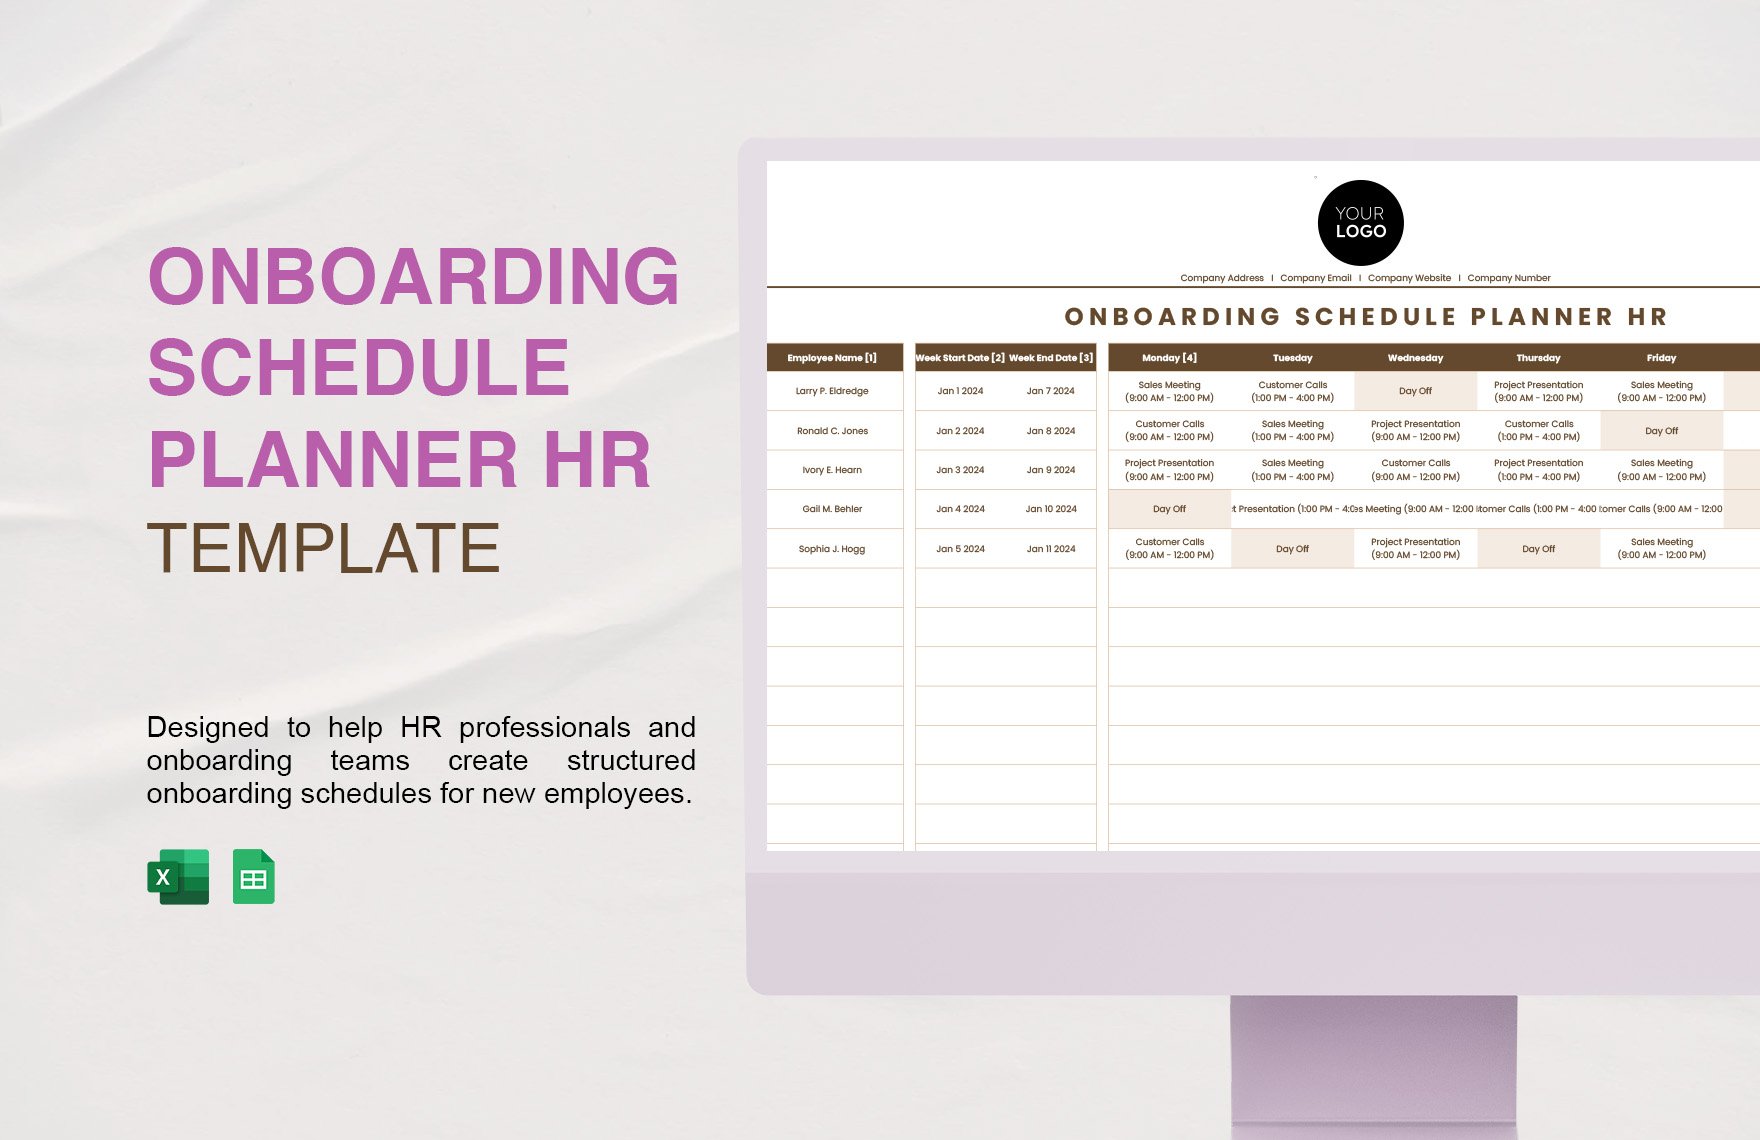 Onboarding Schedule Planner HR Template